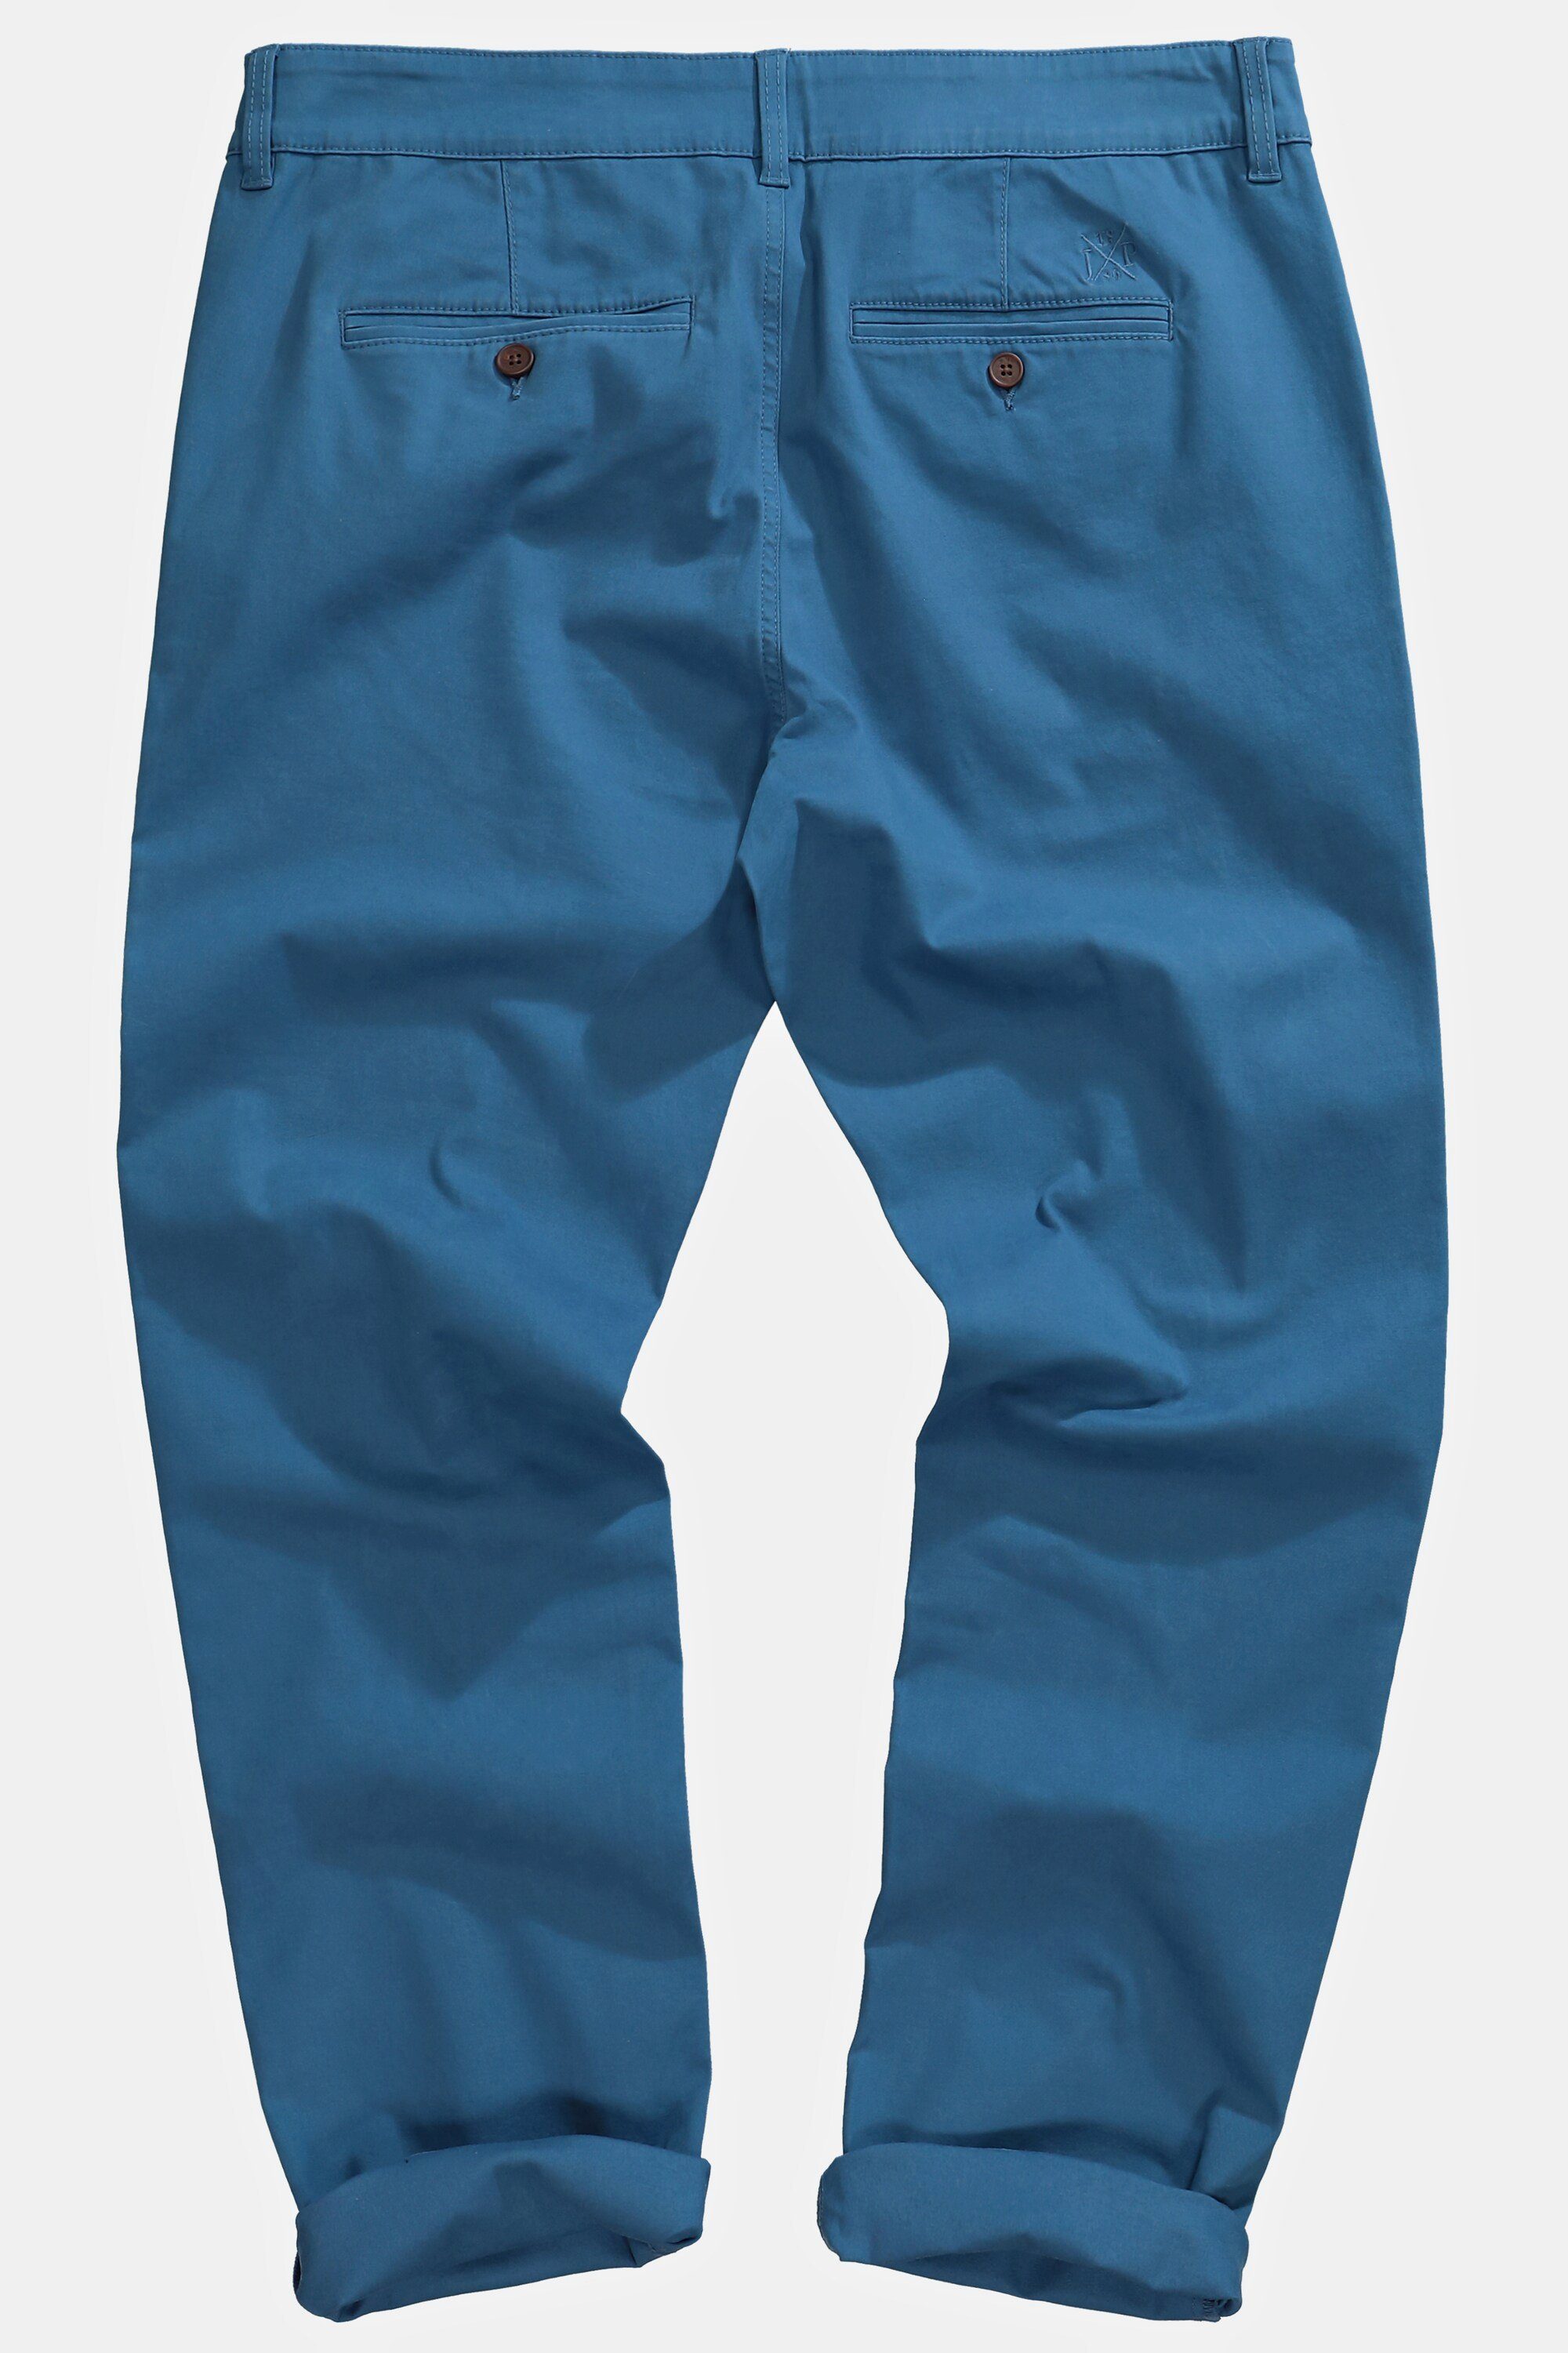 JP1880 Chinohose Chino Hose Bauch Fit 4-Pocket blue denim FLEXNAMIC®